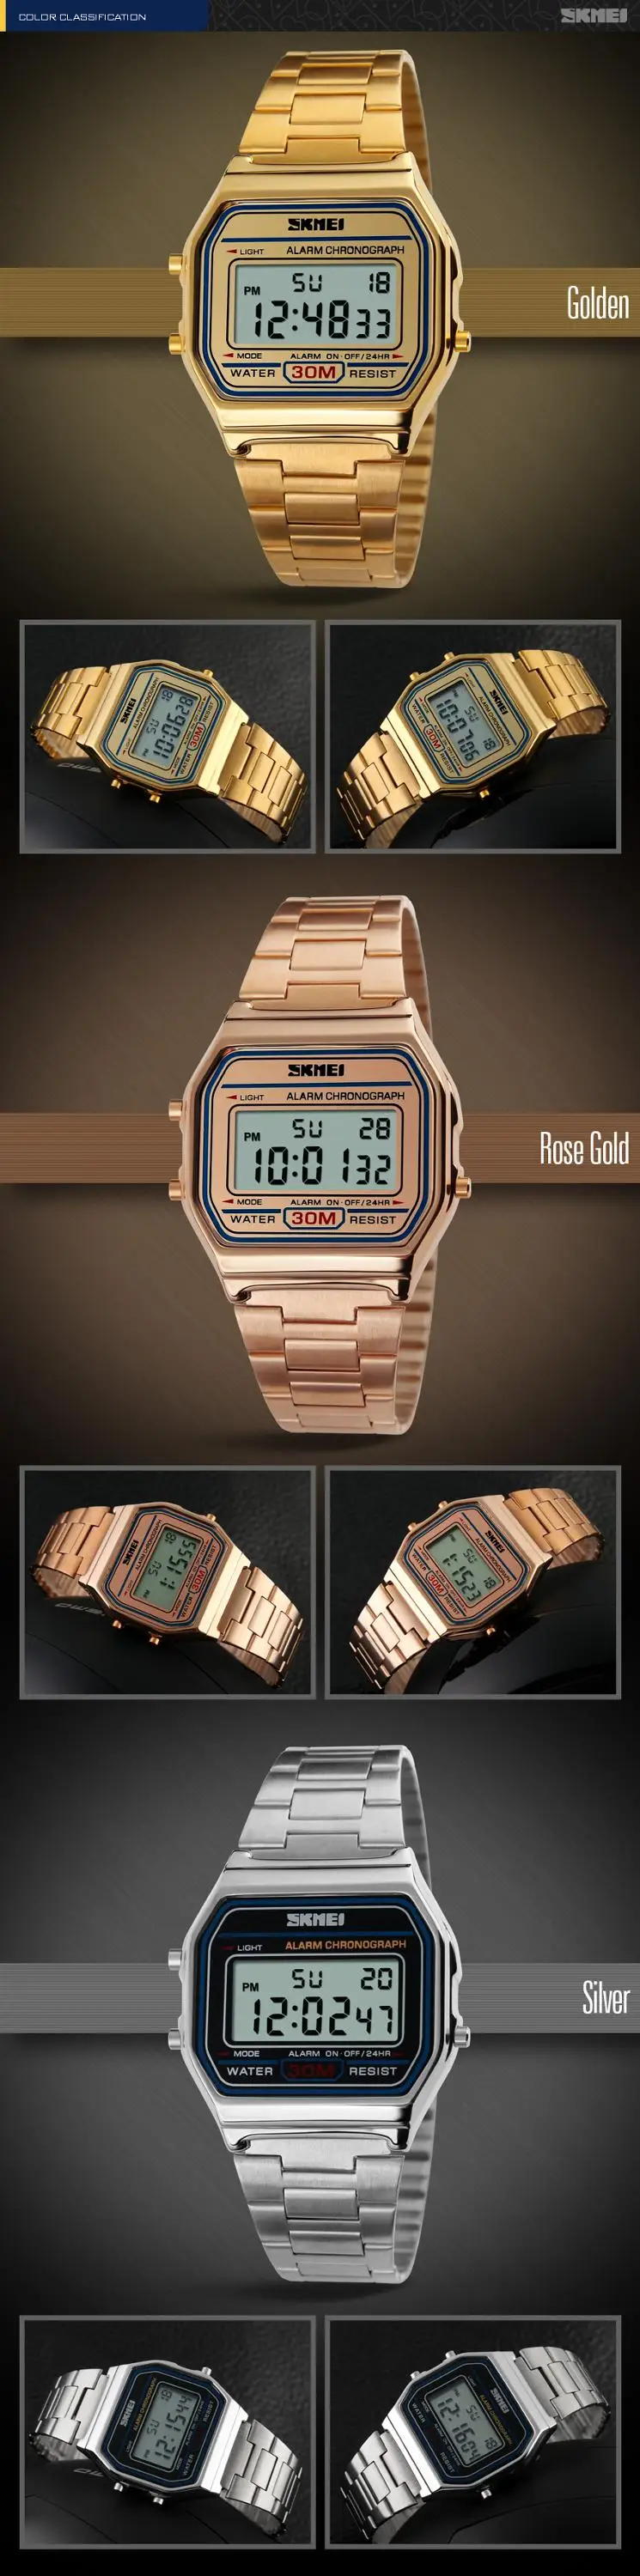 SKMEI 1123 Classic Men LED Digital Watch Waterproof Stainless Steel Electronic Wrist Watches